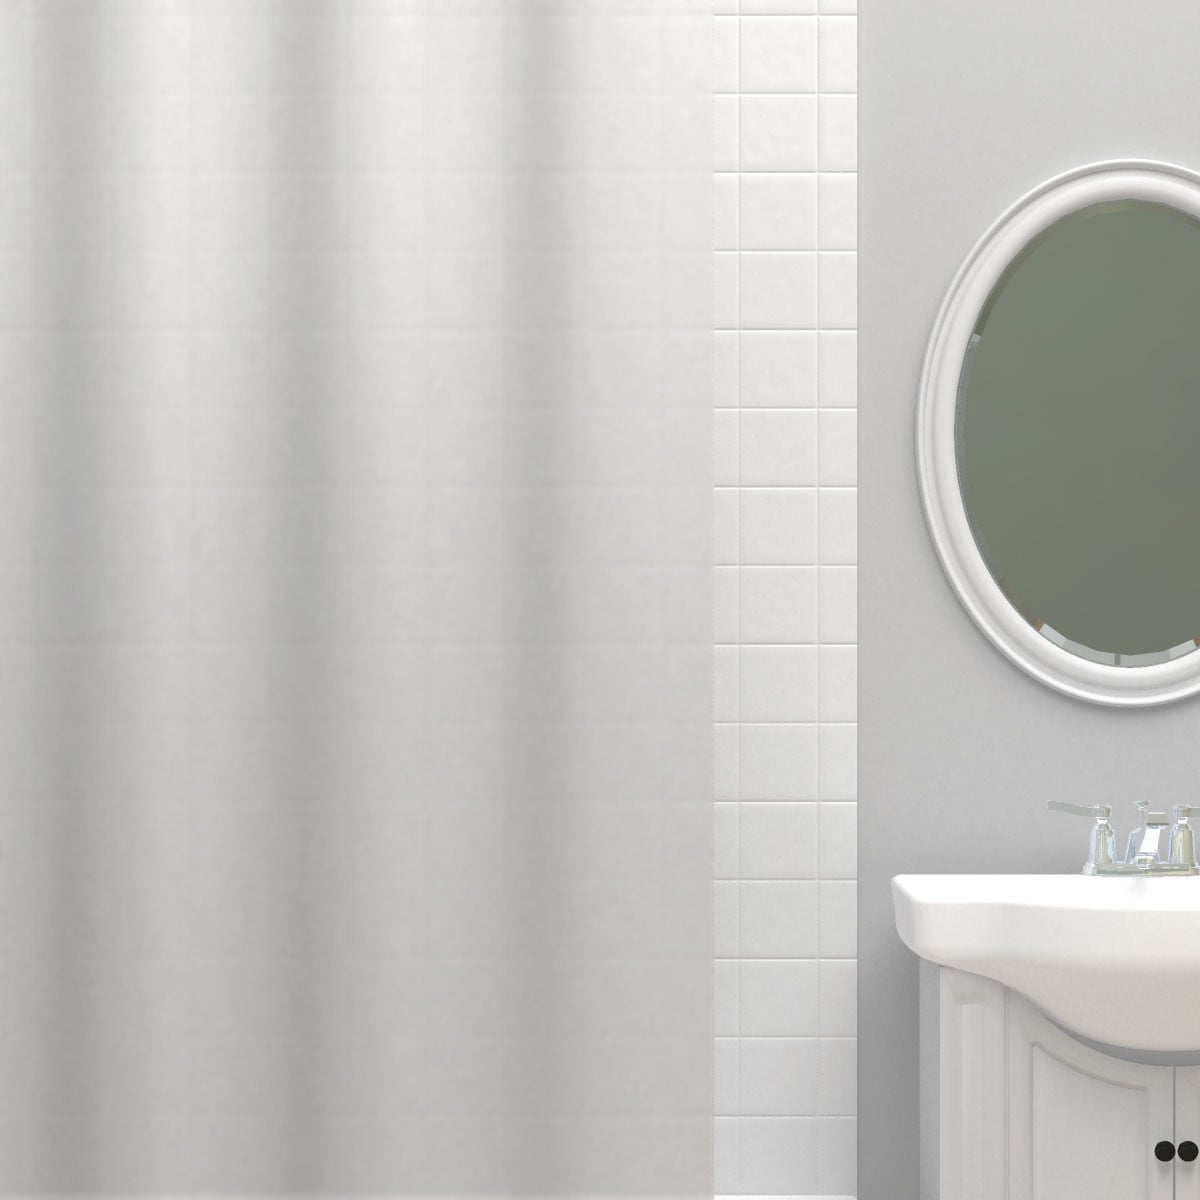 Eva Peva Frosted Solid Shower Liner, Inside Shower Curtain